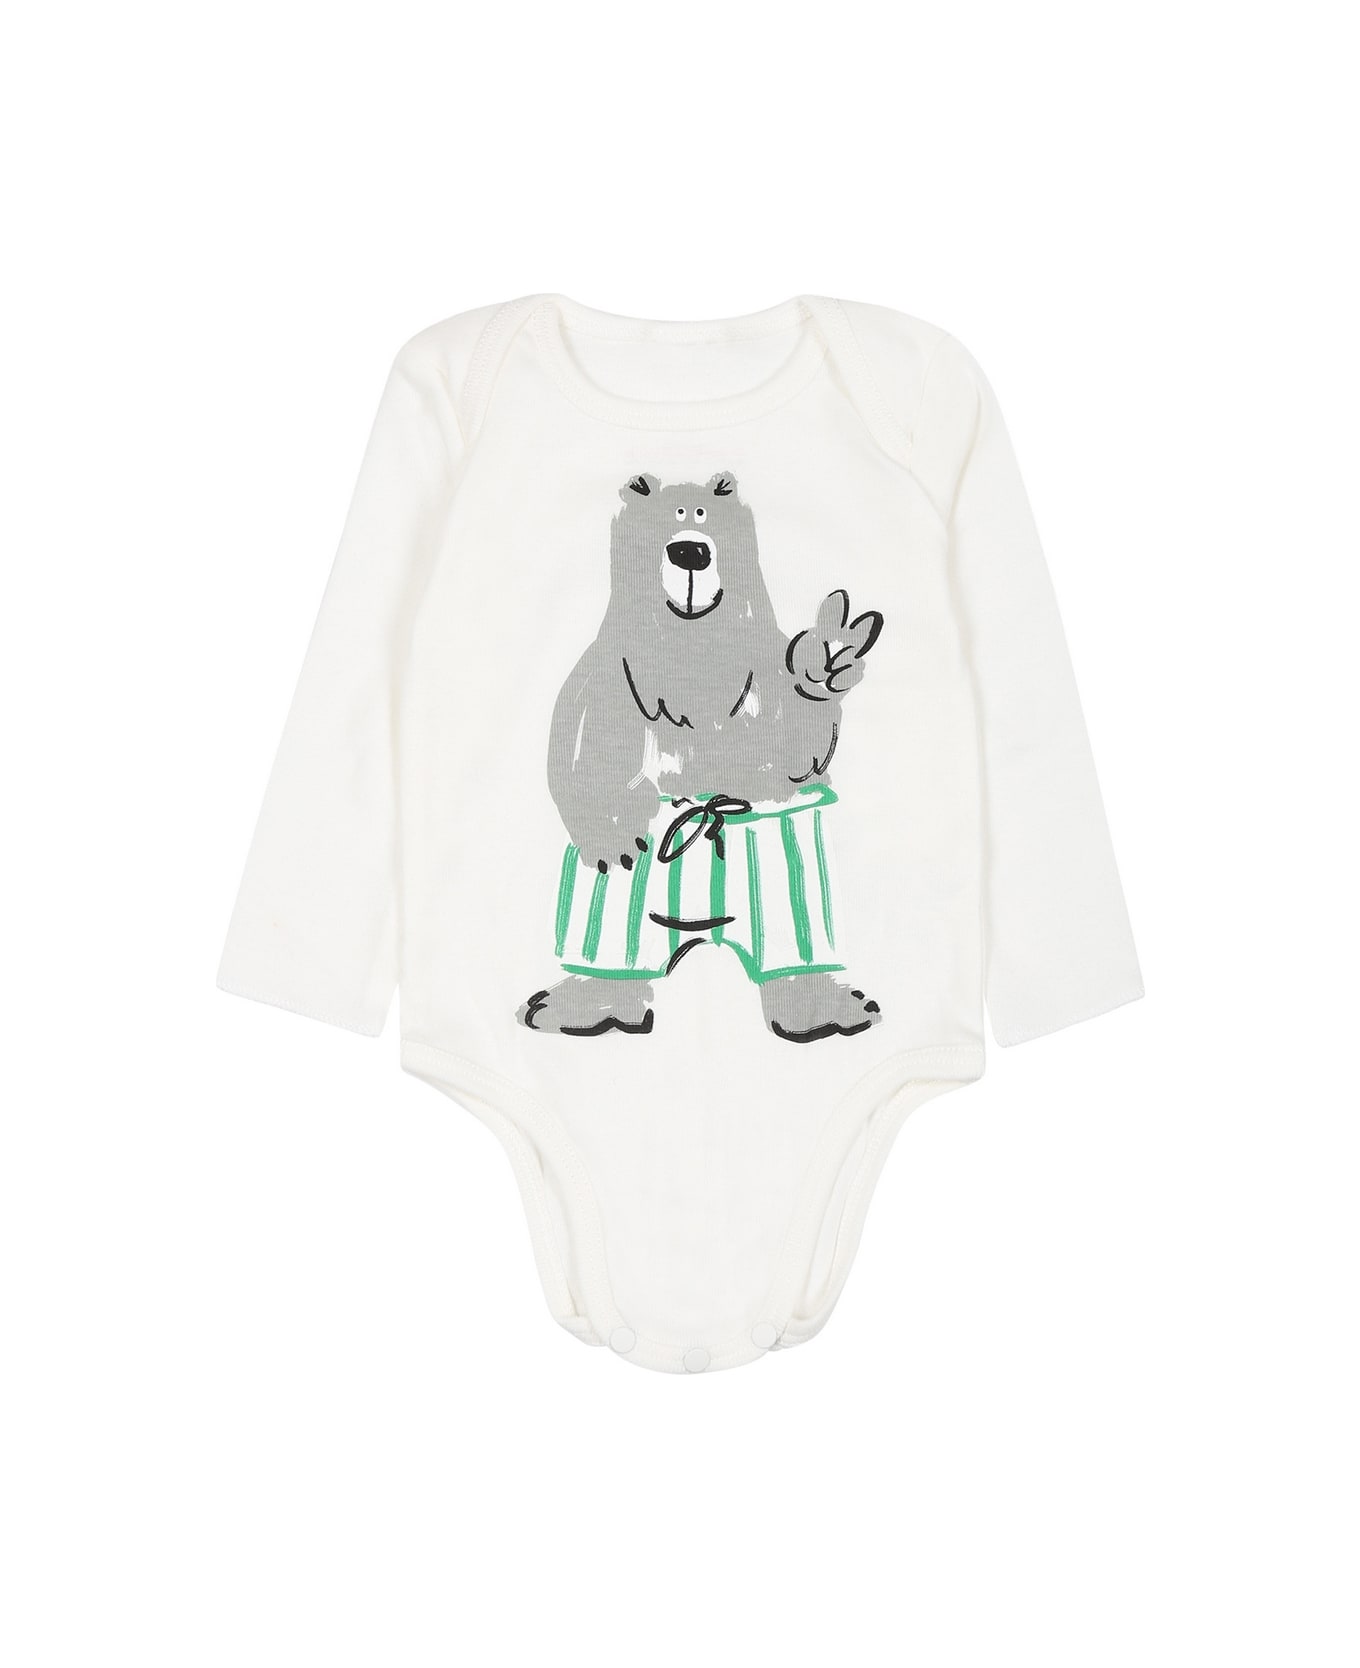 Stella McCartney Kids White Set For Baby Boy With Printed Bear - White